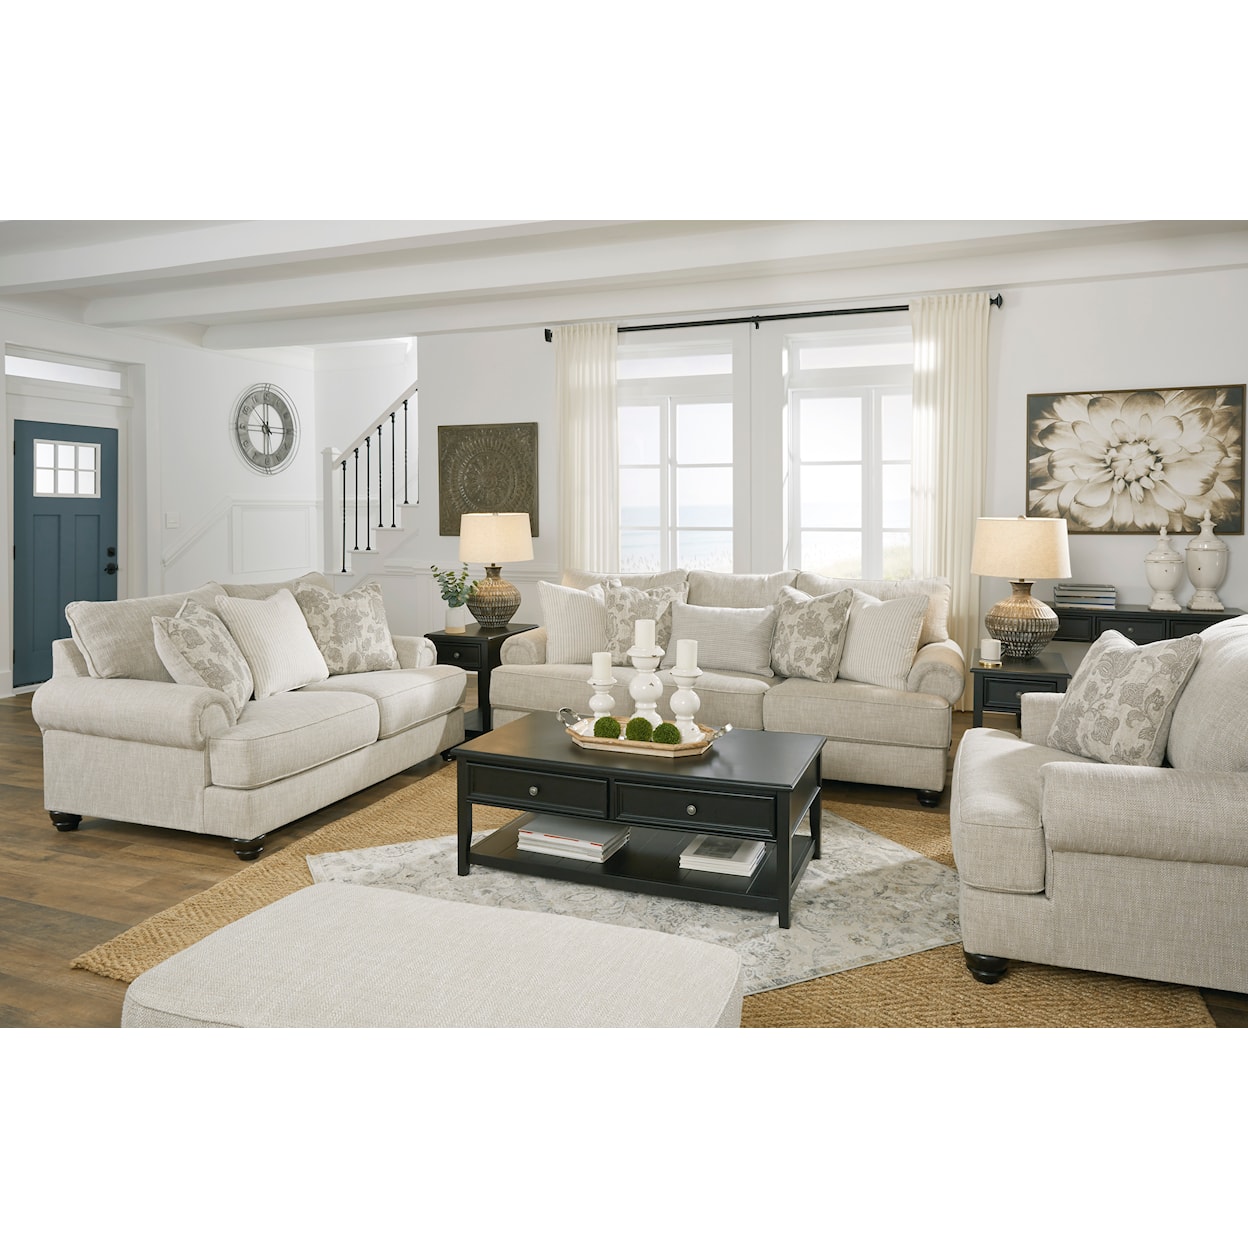 Benchcraft Asanti 3-Piece Living Room Set